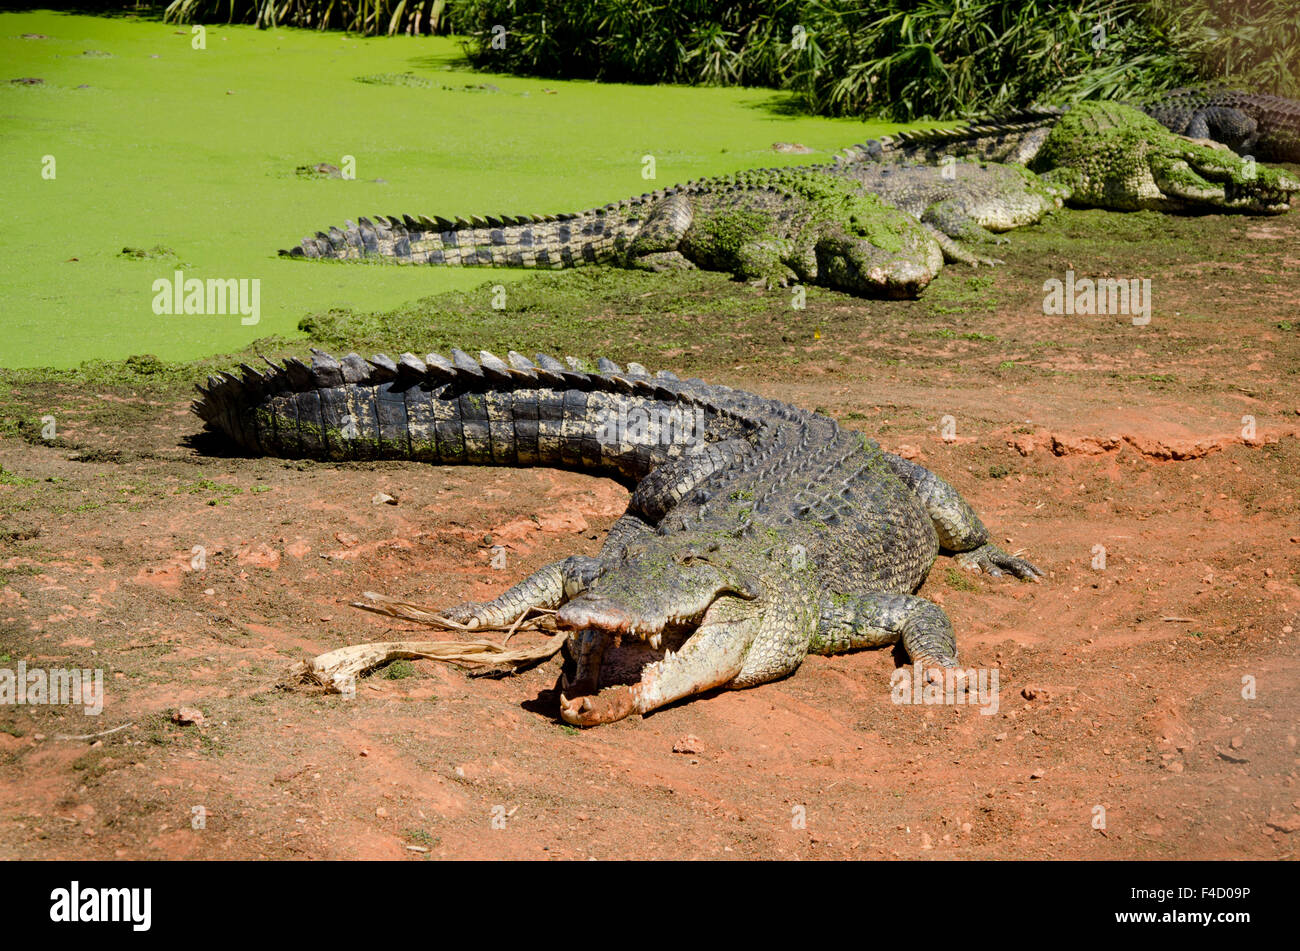 Australia, Broome. Malcolm Douglas Crocodile Park. Large saltwater crocodiles (Crocodylus porosus) in front of green duckweed covered pond (Lemna minuta). Stock Photo